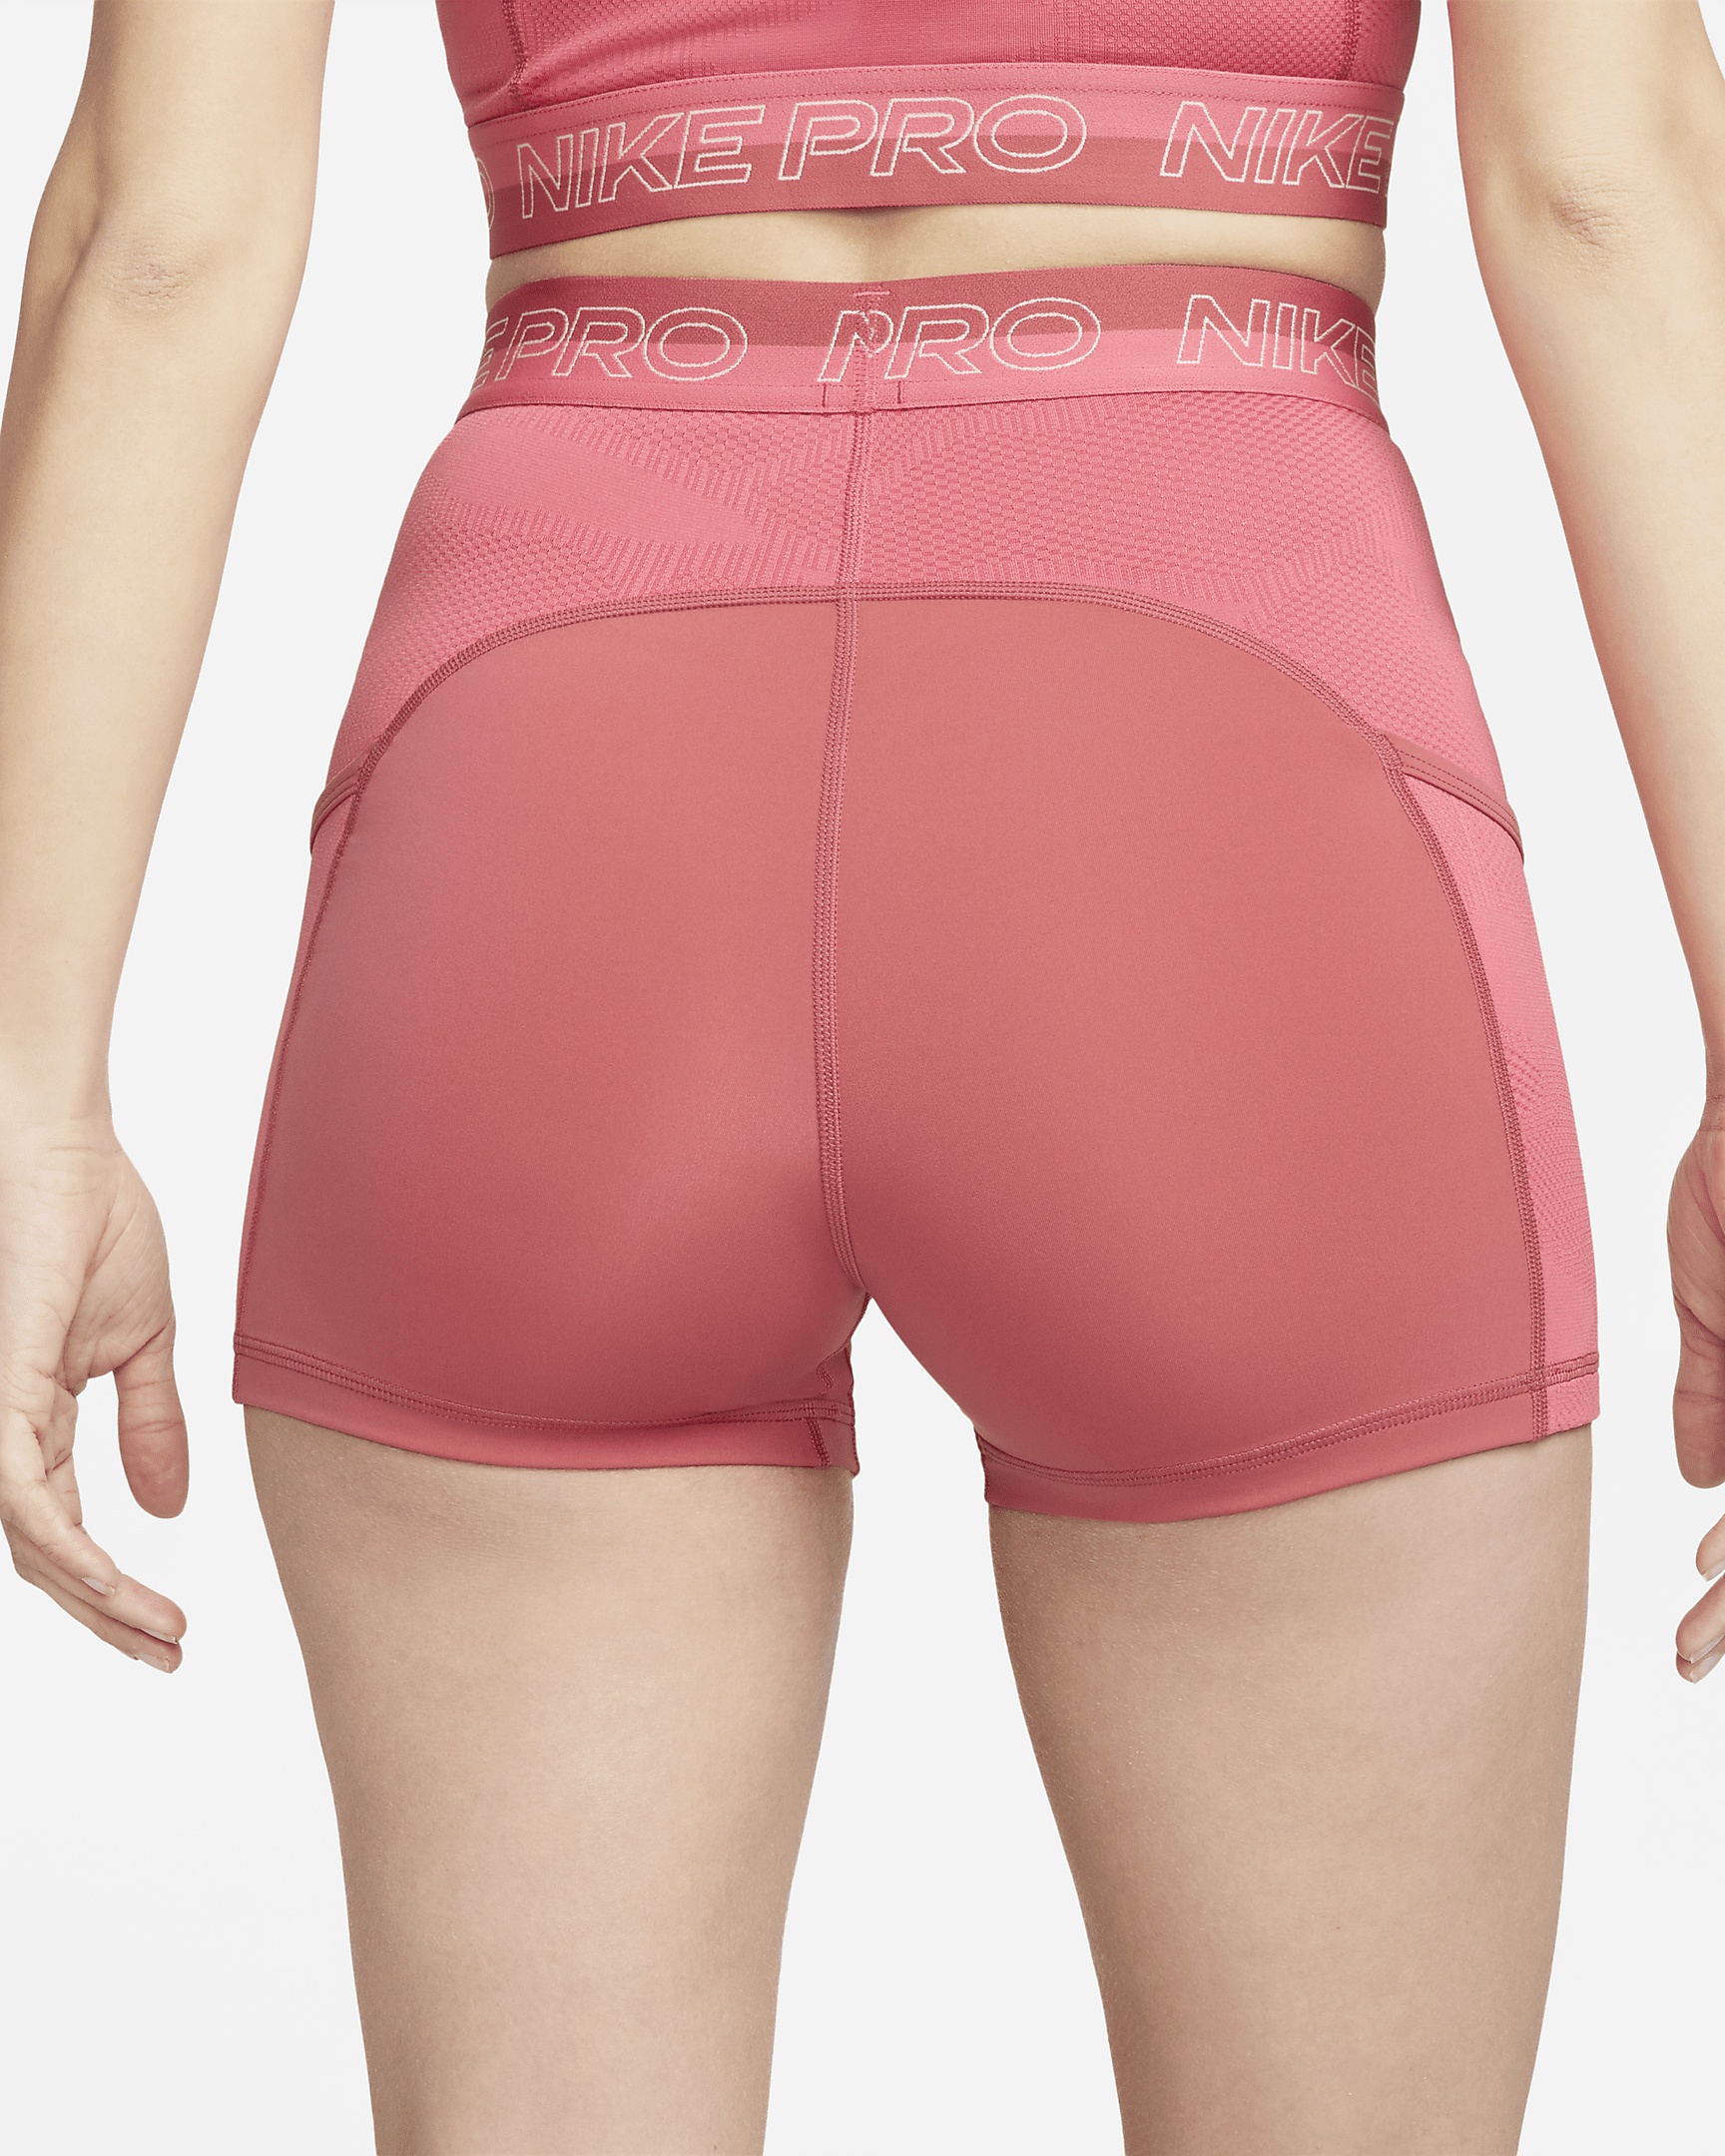 Women's Nike Pro High-Waisted 3" Training Shorts with Pockets - 3